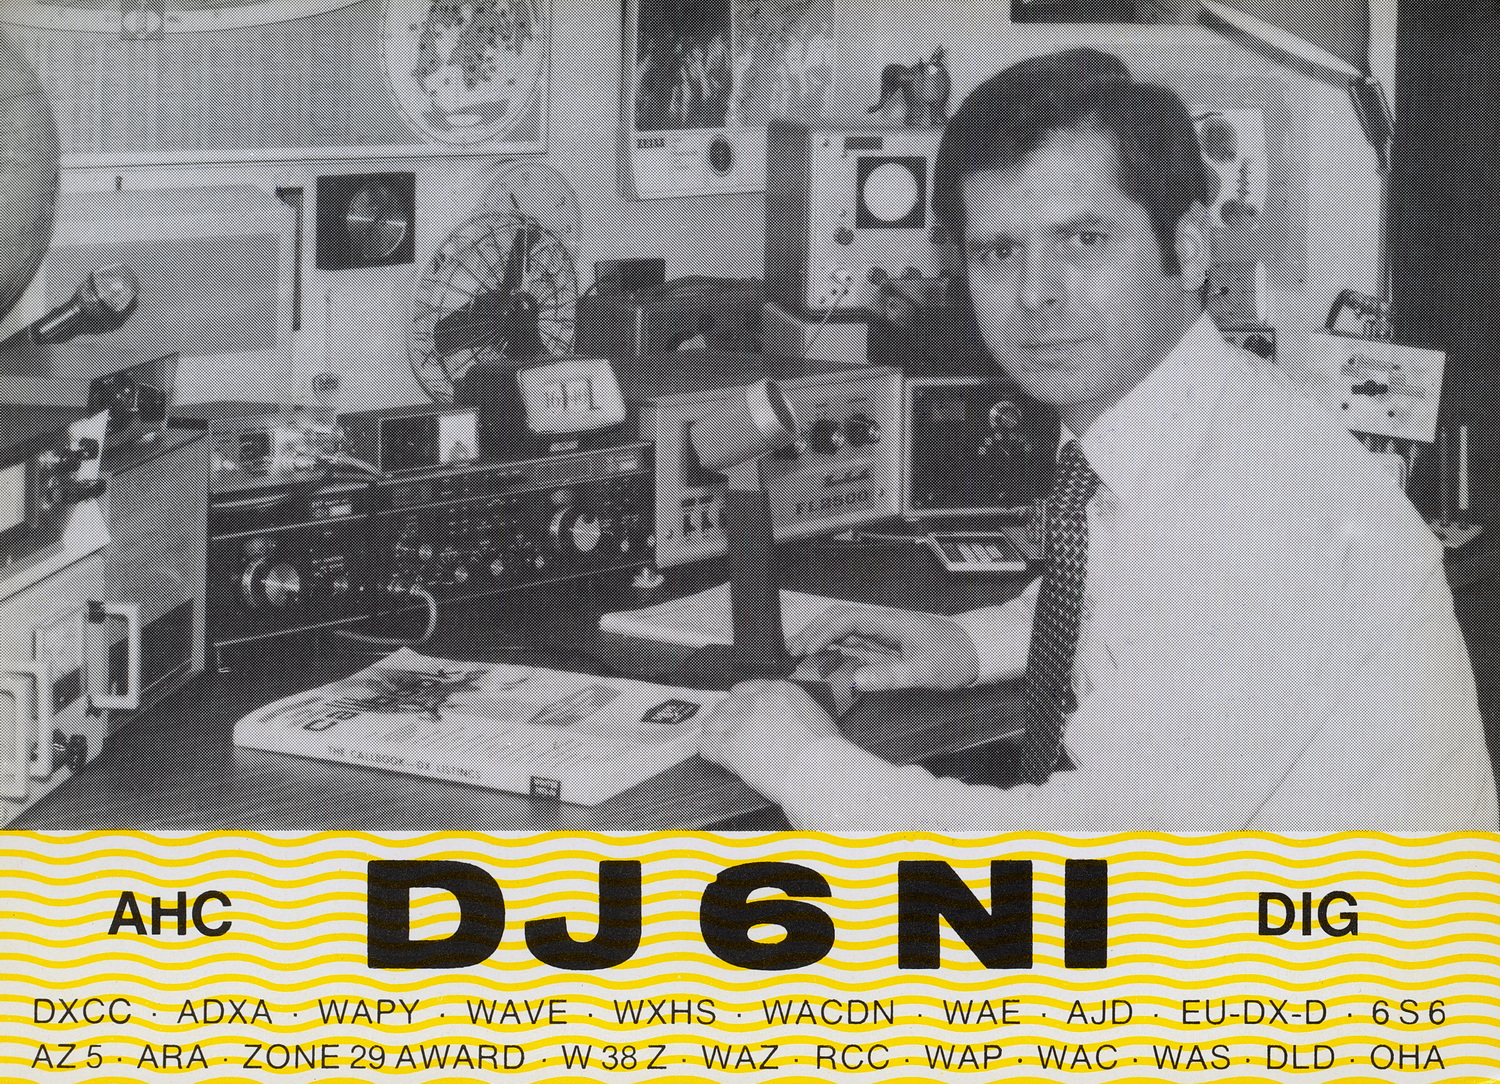 DJ6NI (Gunter), QSO on 16th September 1981 on both 80m and 40m SSB.